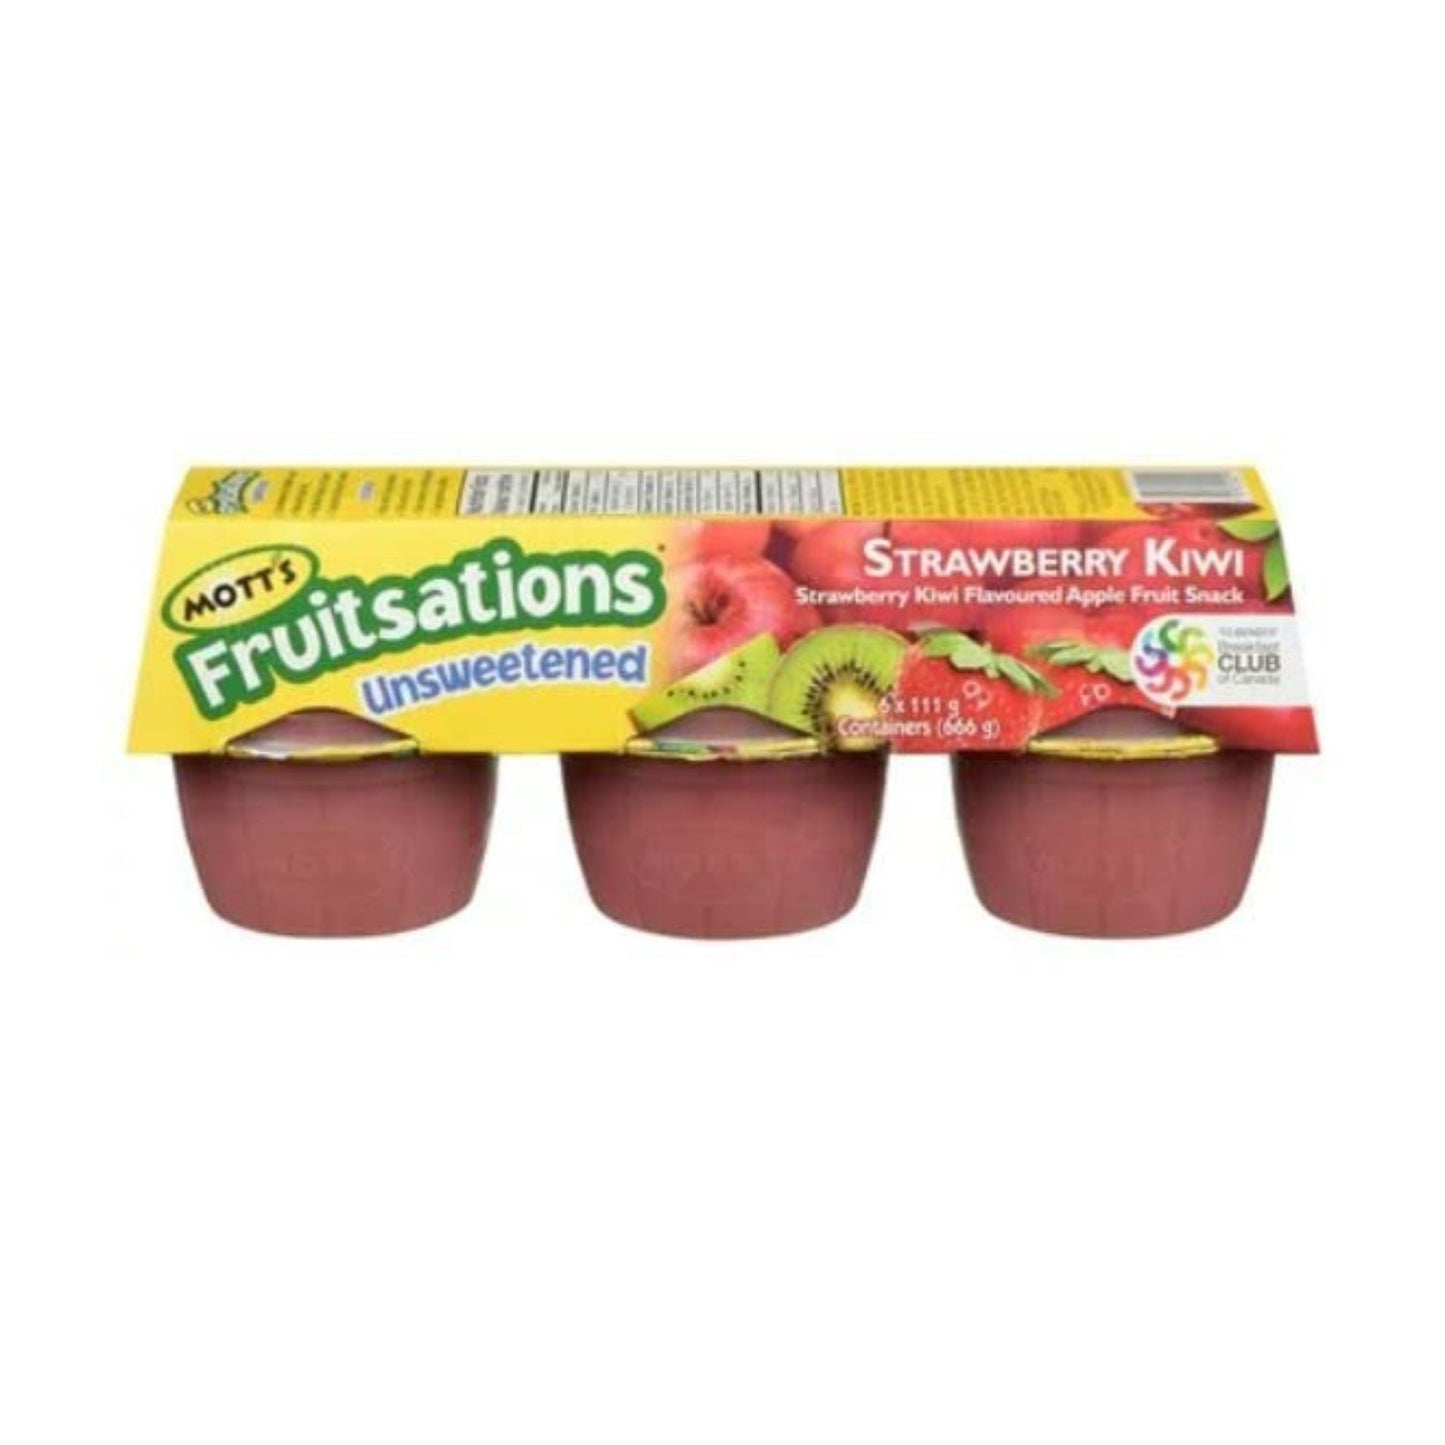 Mott’s Fruitsations Unsweetened Strawberry Kiwi Apple Sauce, 6 x 113g/4oz (Shipped from Canada)